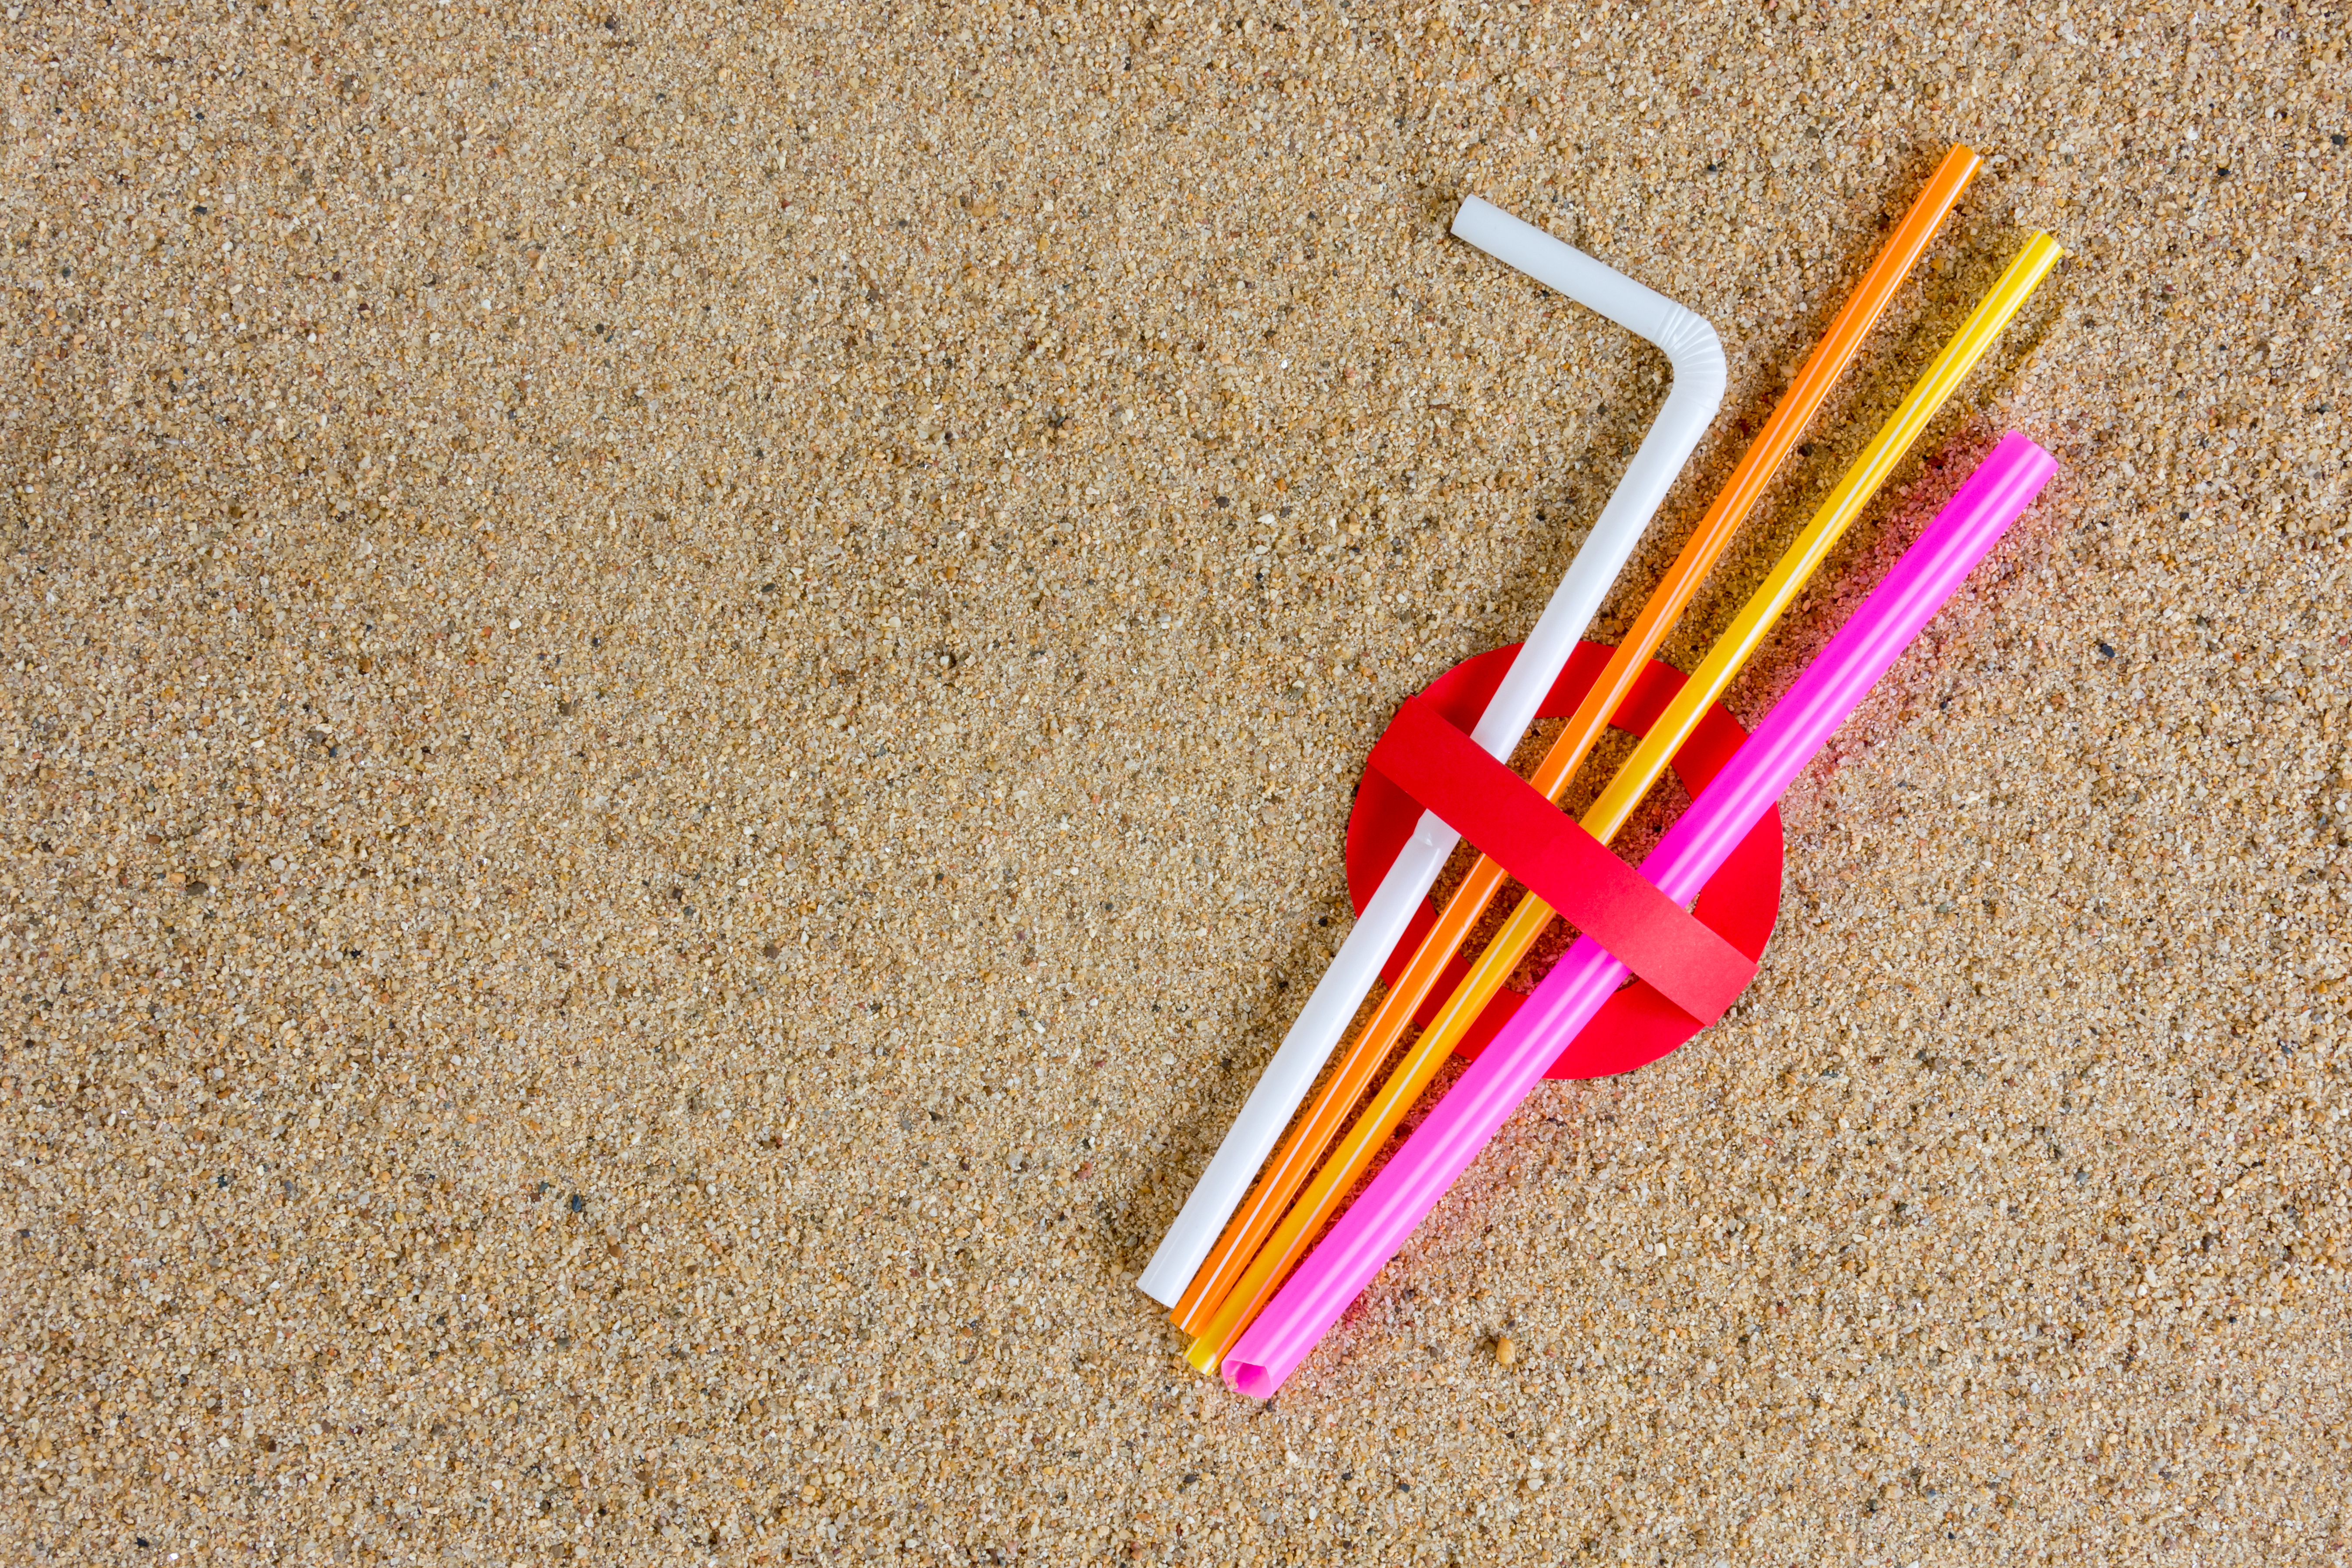 Plastic straws in banned symbol on beach sand.